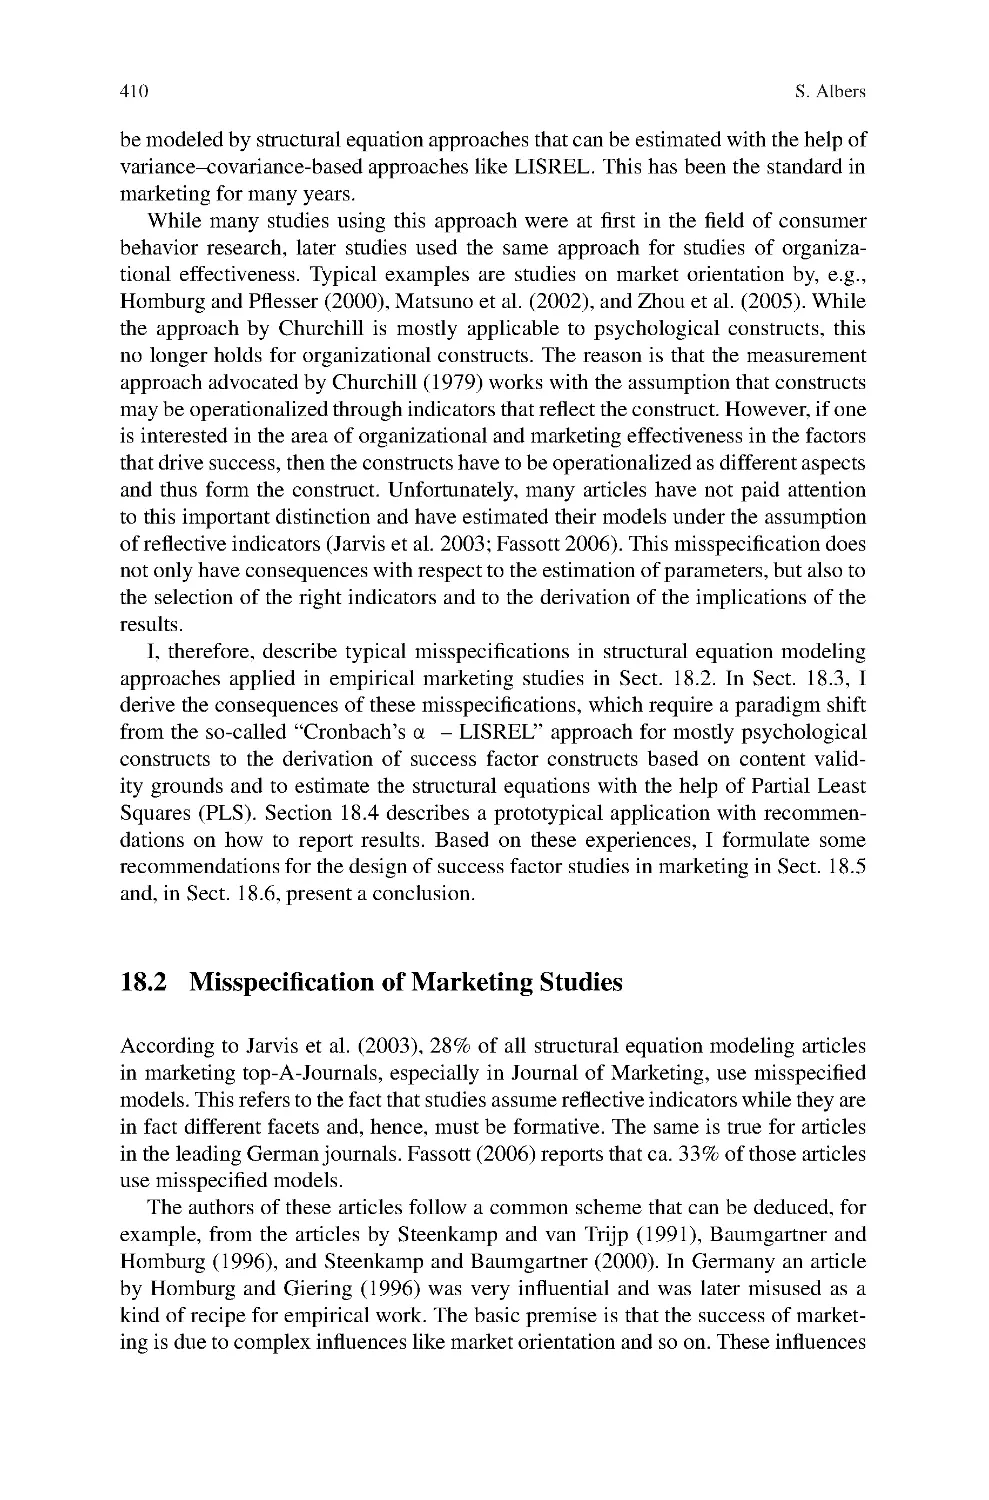 18.2 Misspecification of Marketing Studies